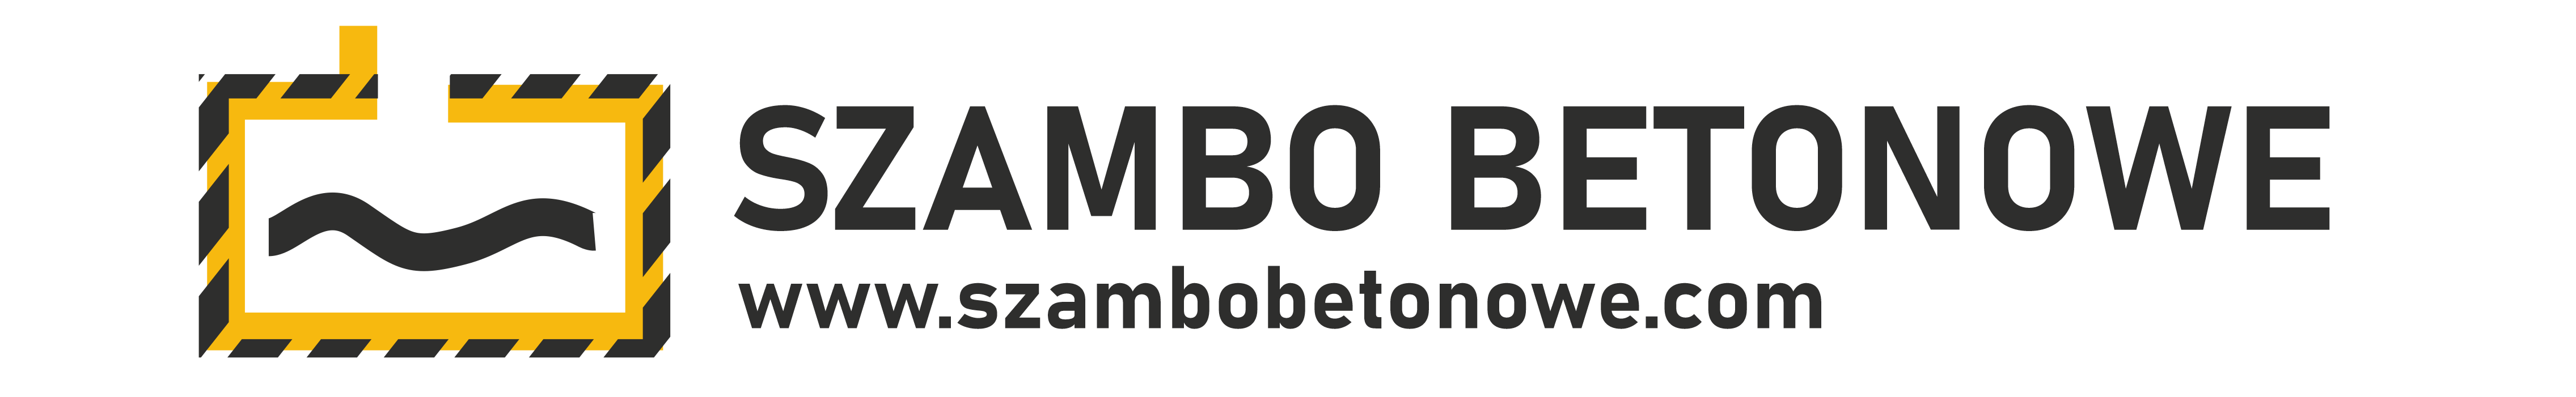 Szambo Betonowe